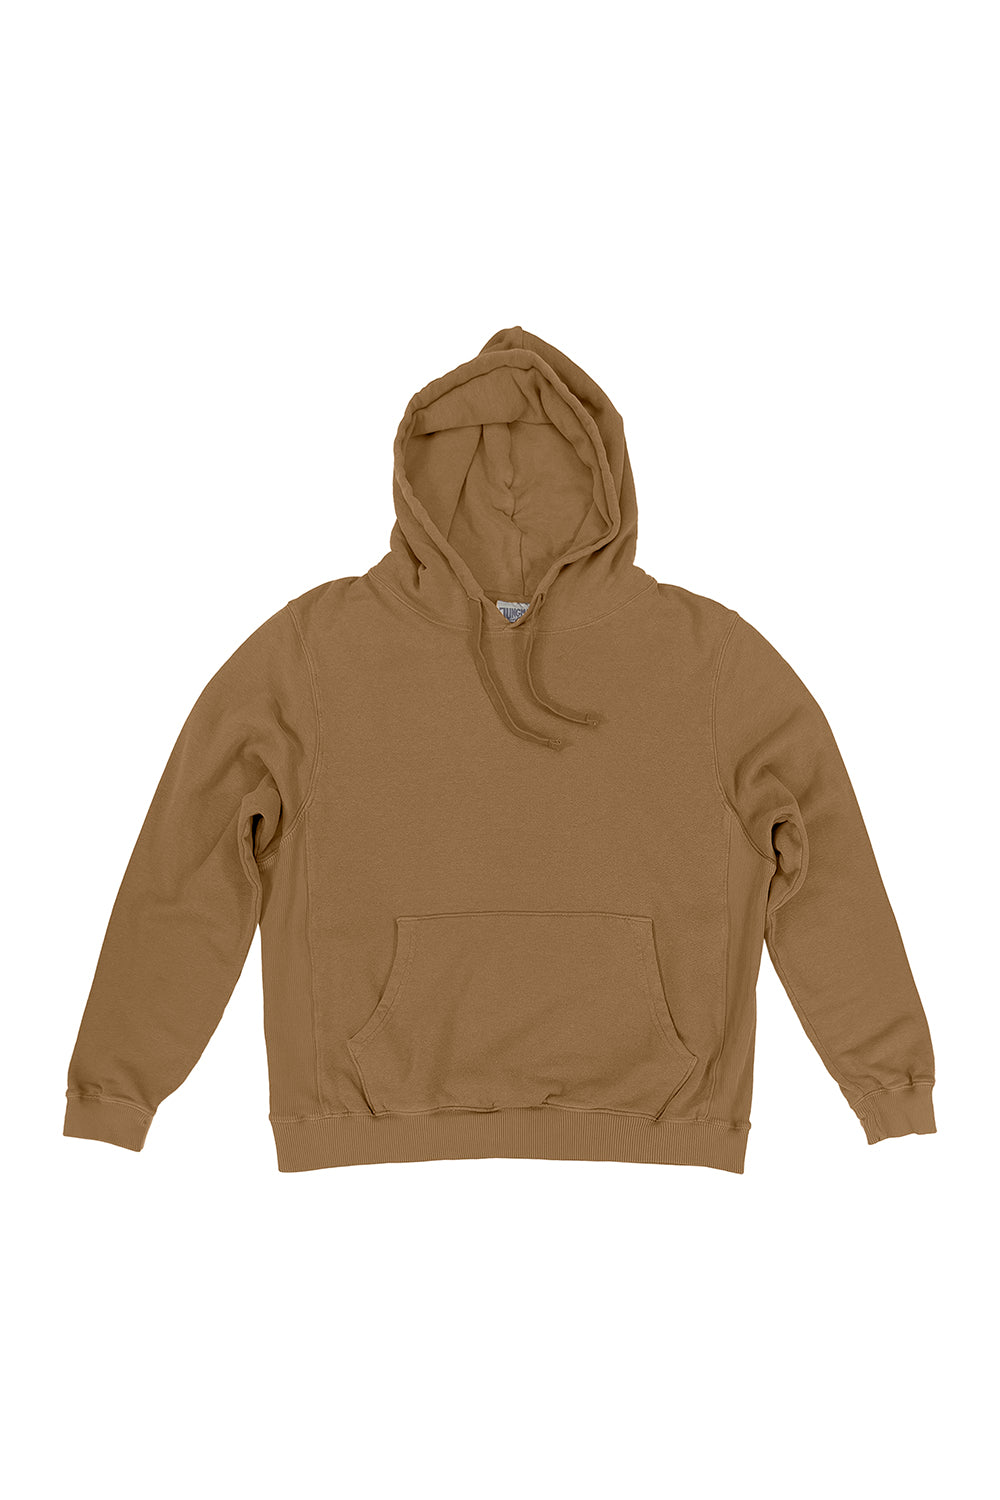 Montauk Hooded Sweatshirt | Jungmaven Hemp Clothing & Accessories / Color: Coyote